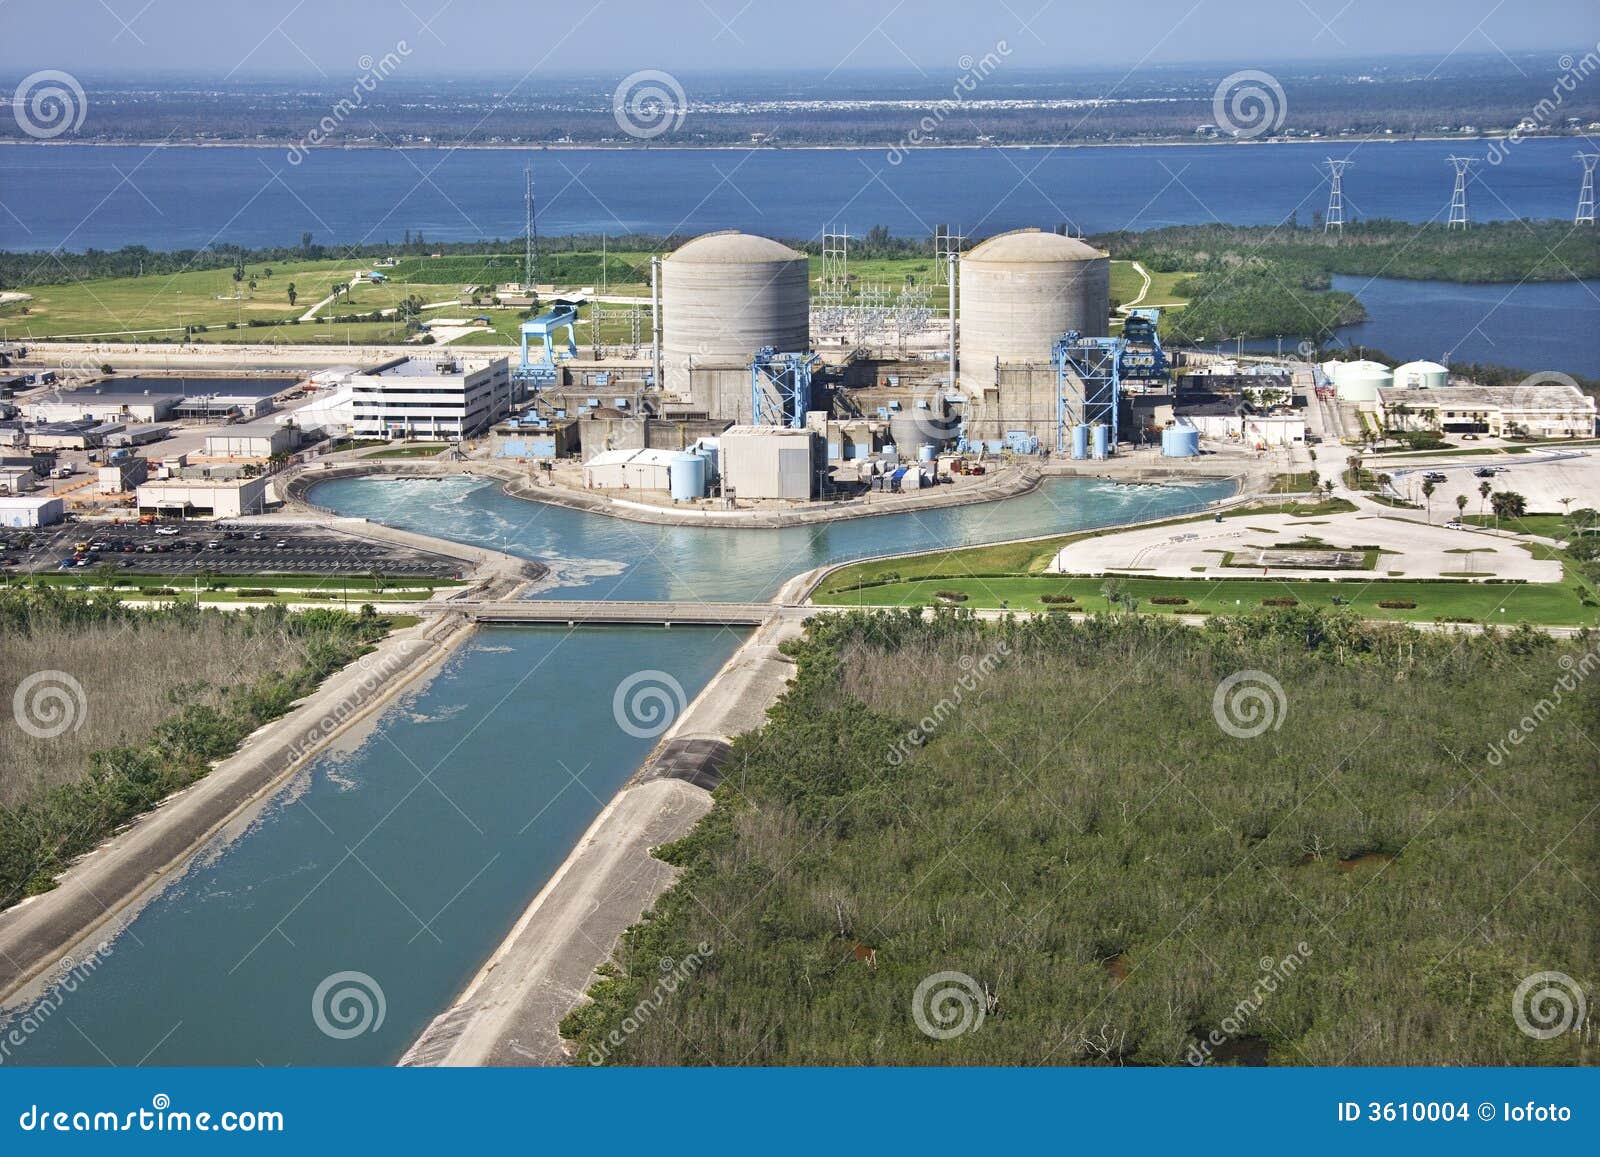 nuclear power plant.